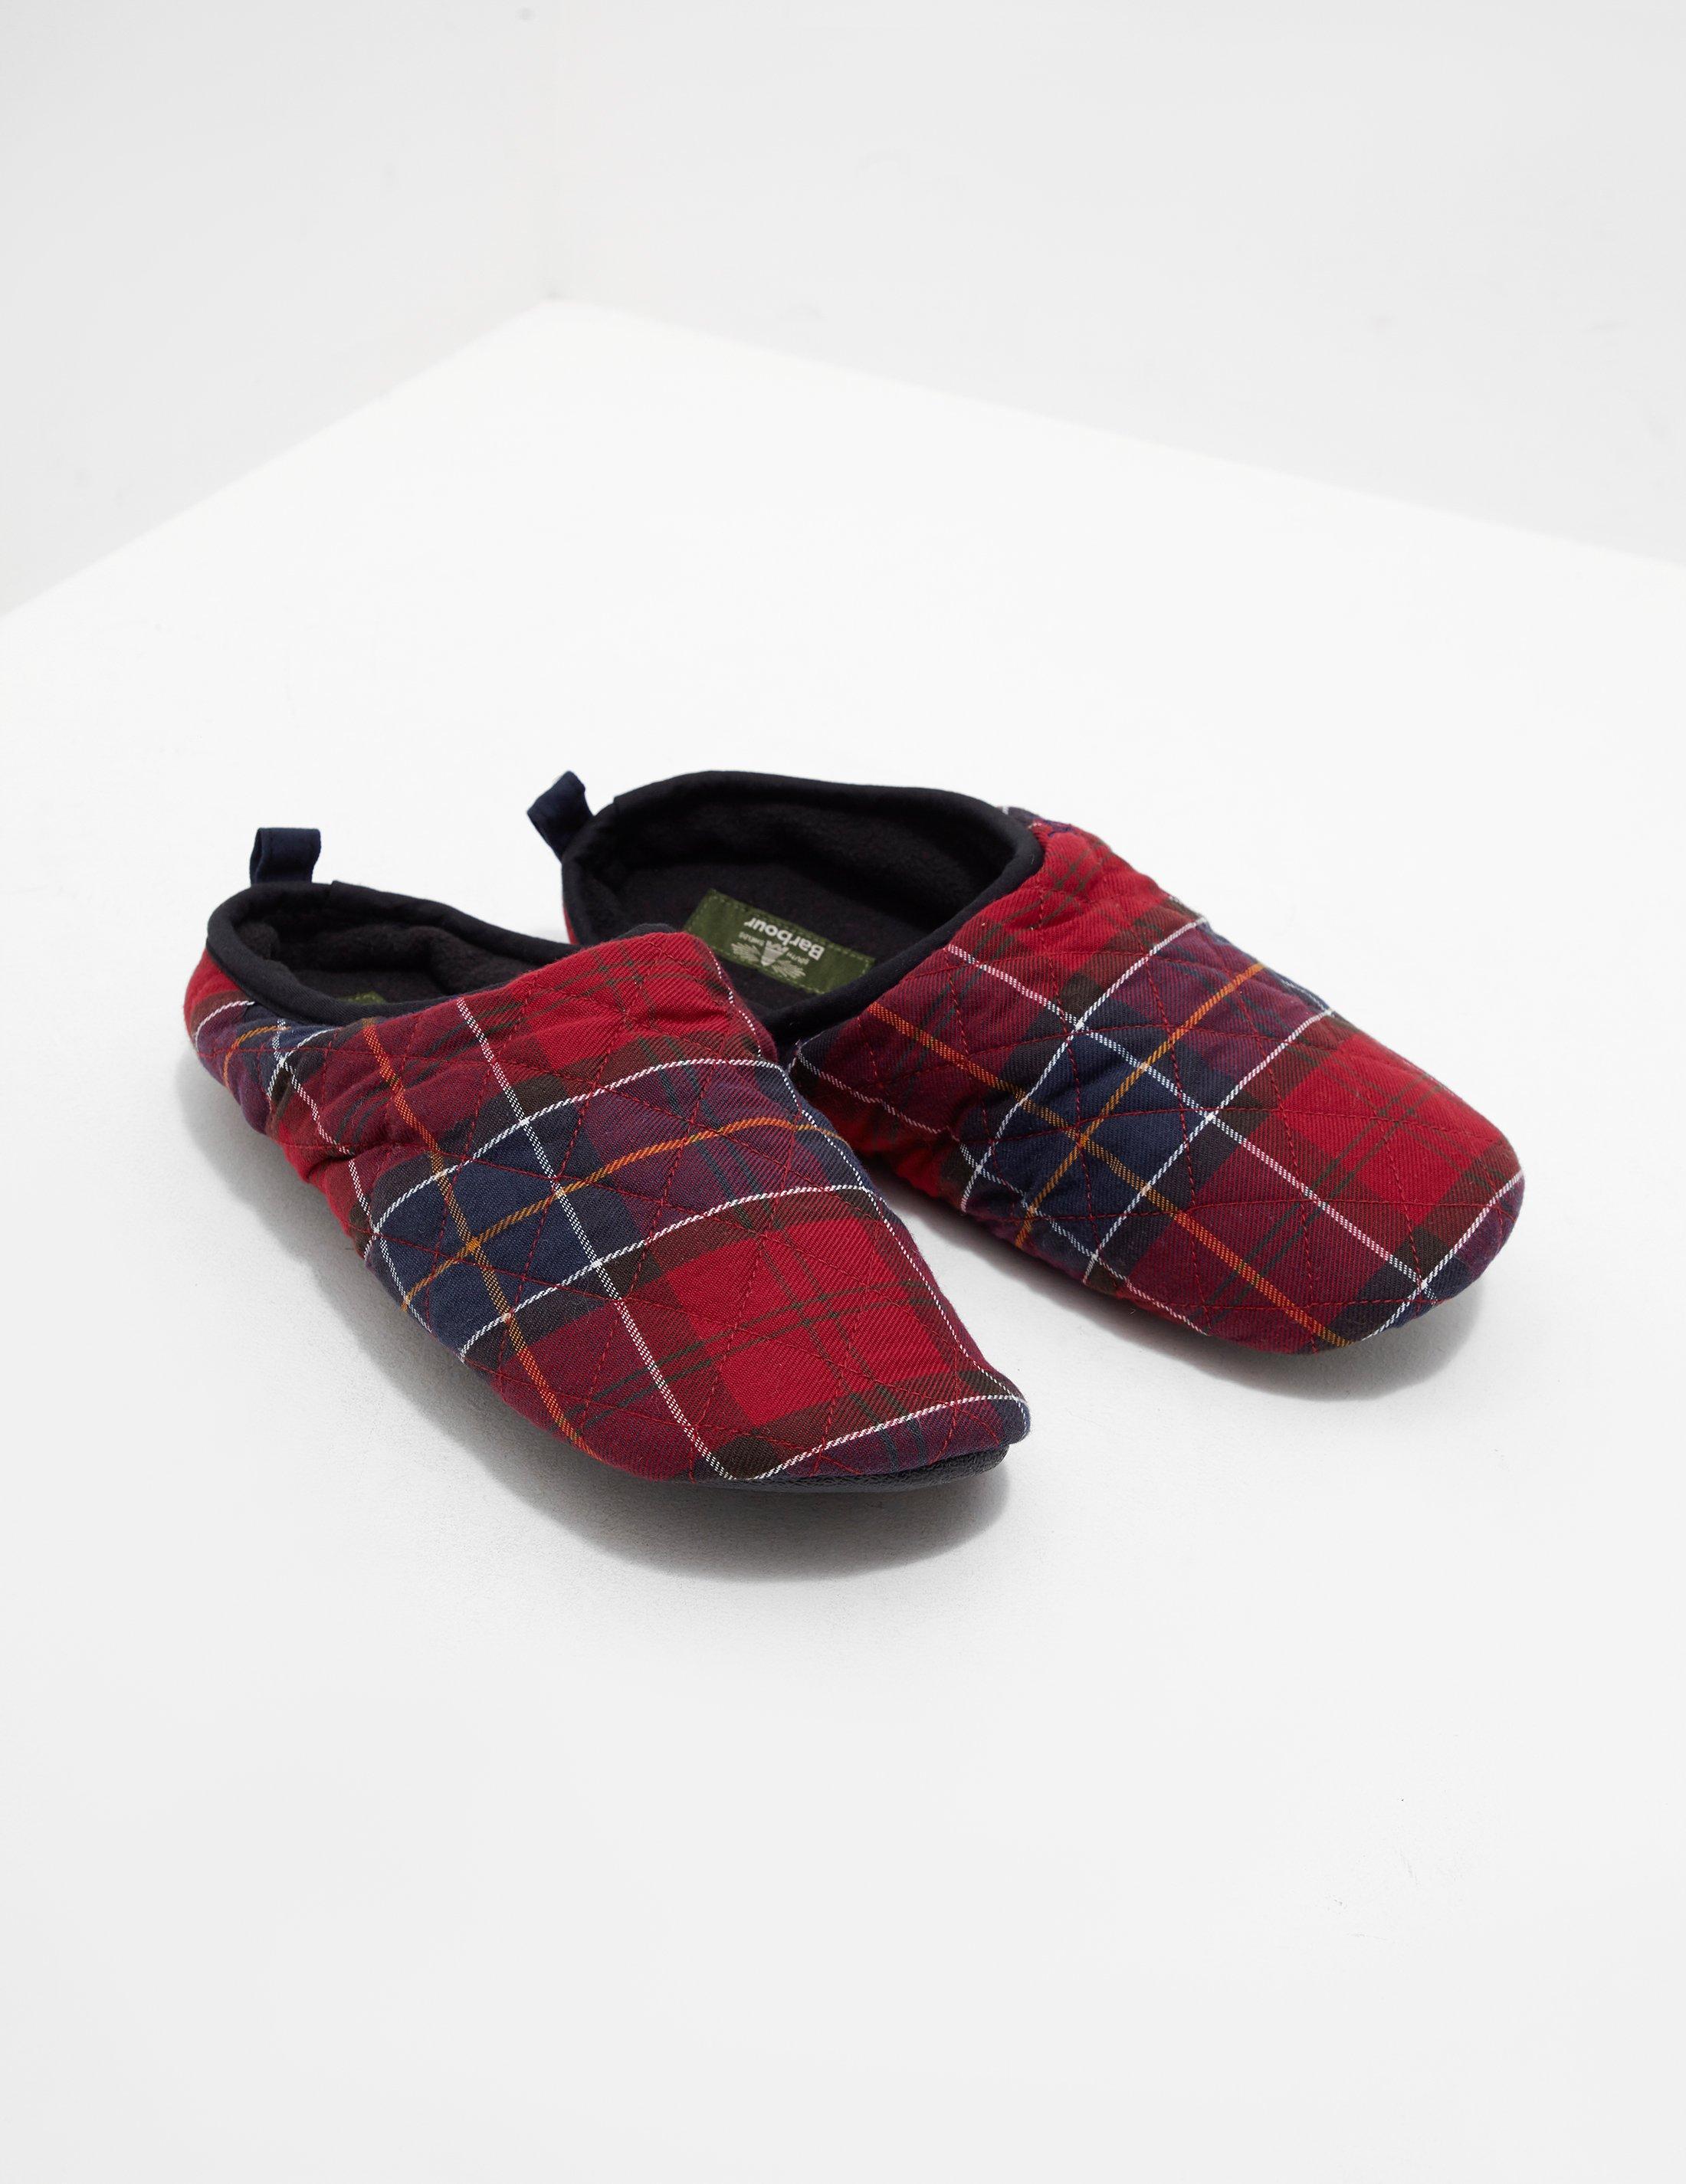 barbour tartan slippers